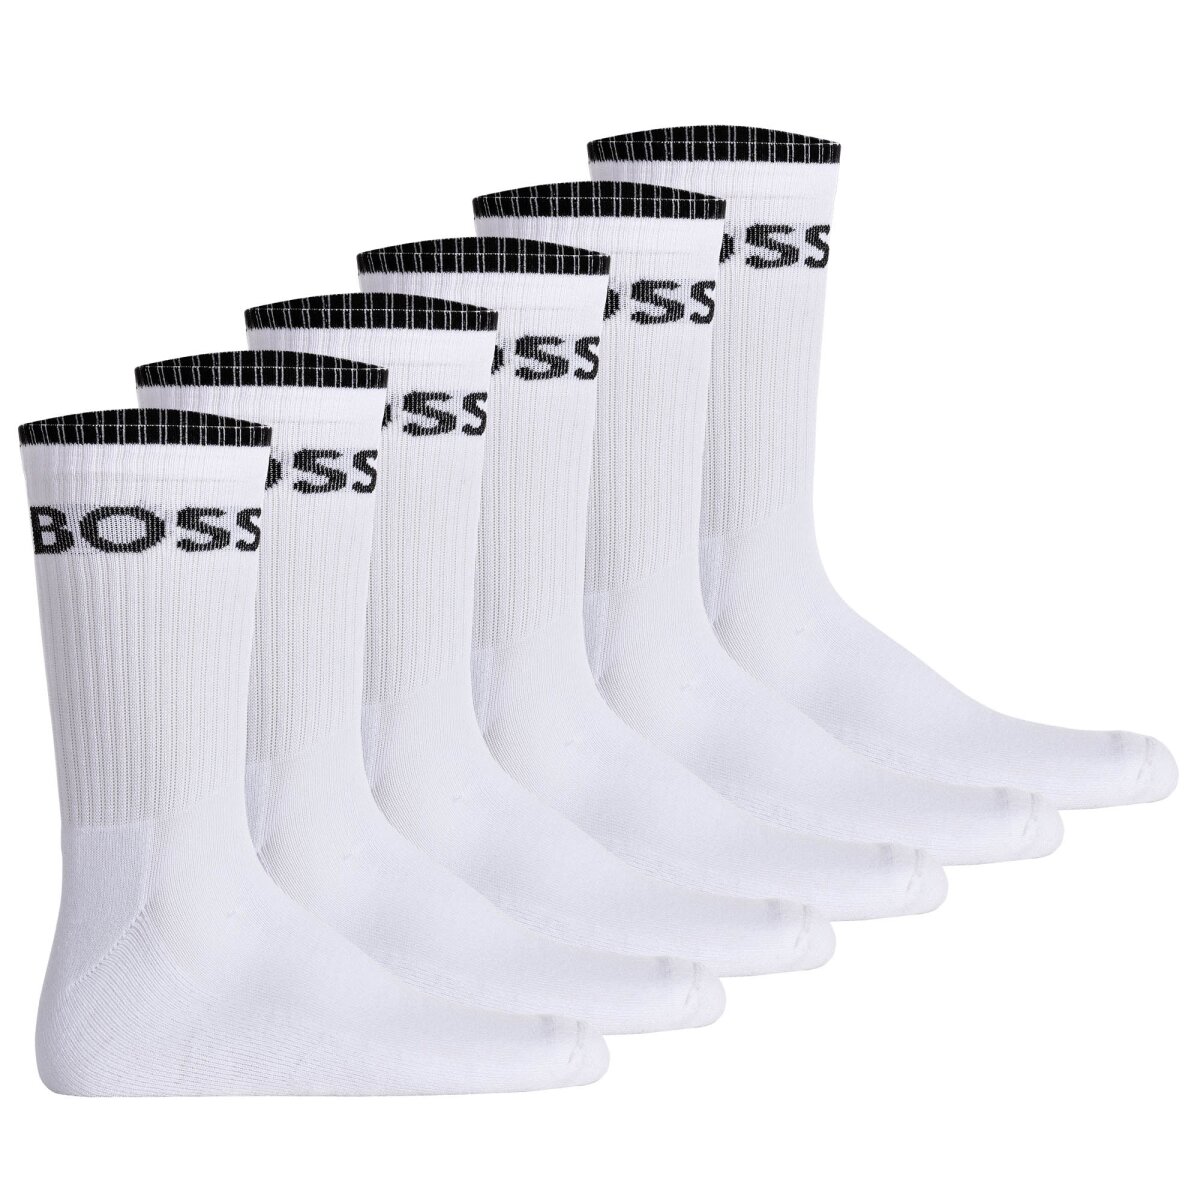 BOSS Herren Socken im 6er Pack - QS Stripe, kurze Länge, 34,95 €